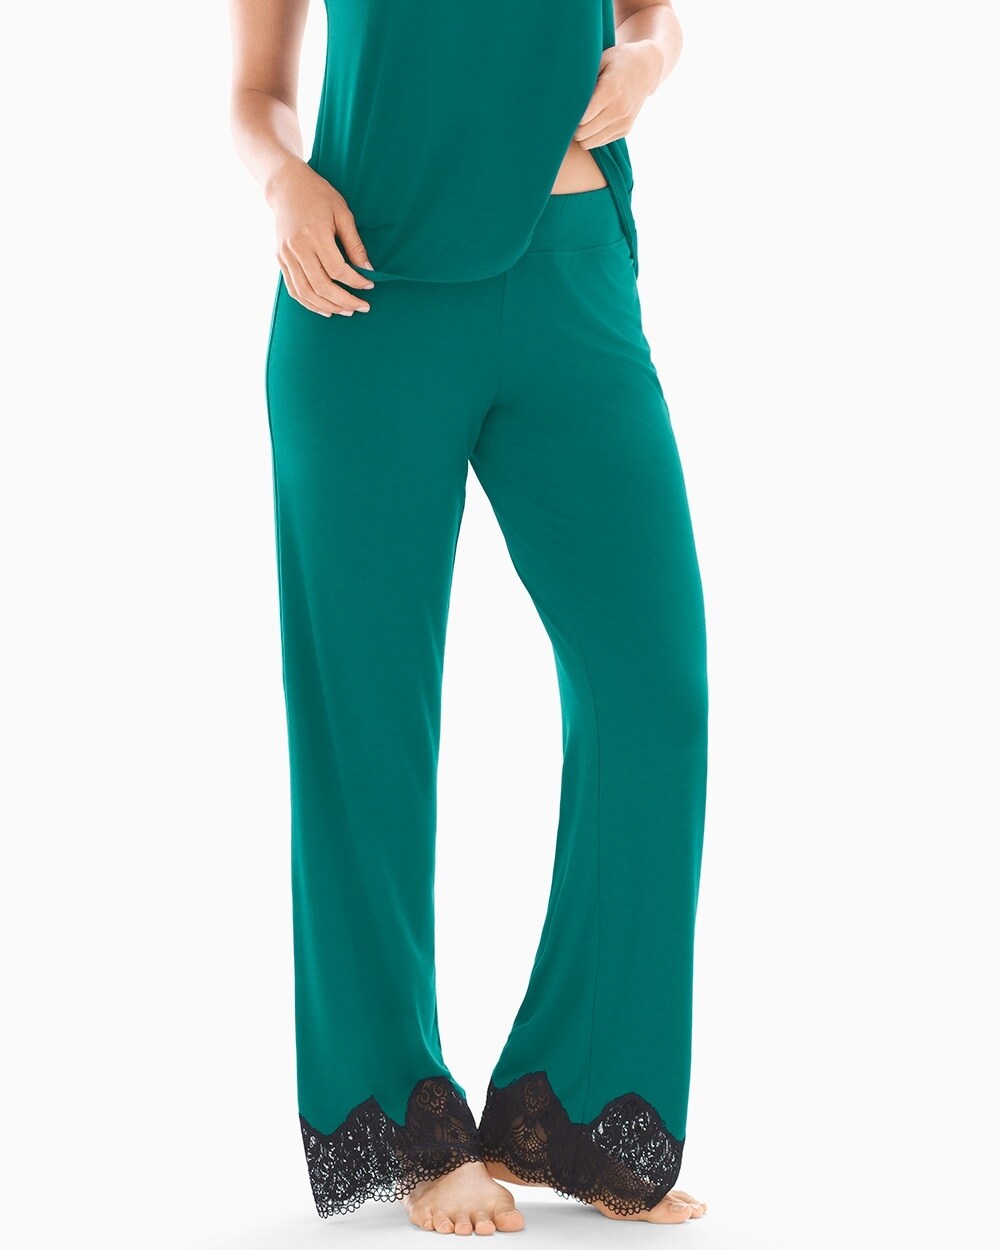 Regal Lace Pajama Pants Green Envy